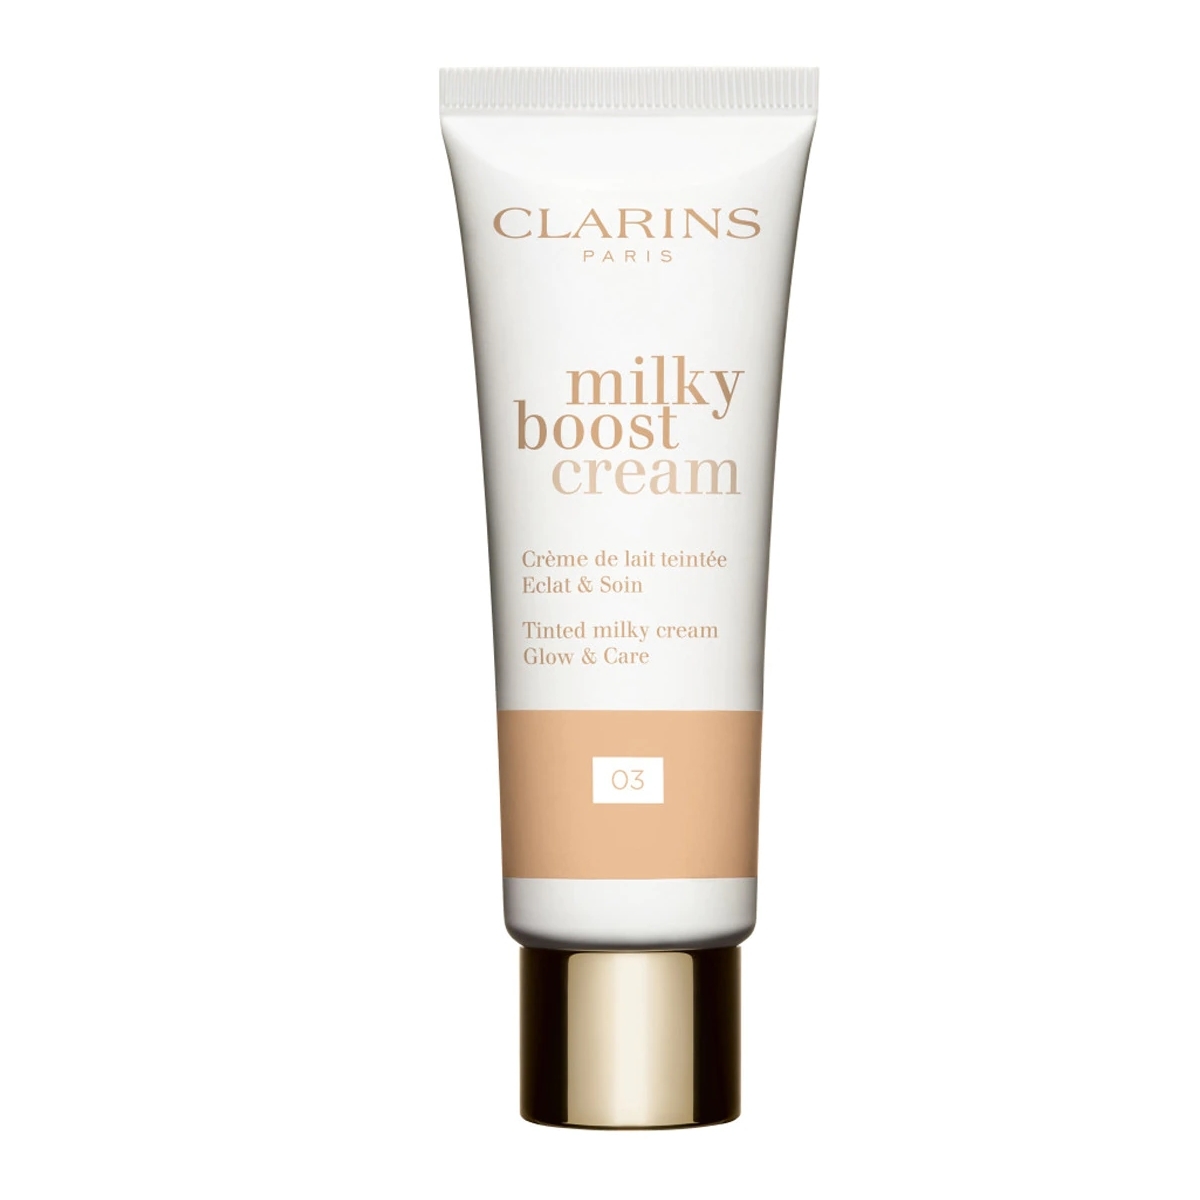 Milky Boost Cream de Clarins.